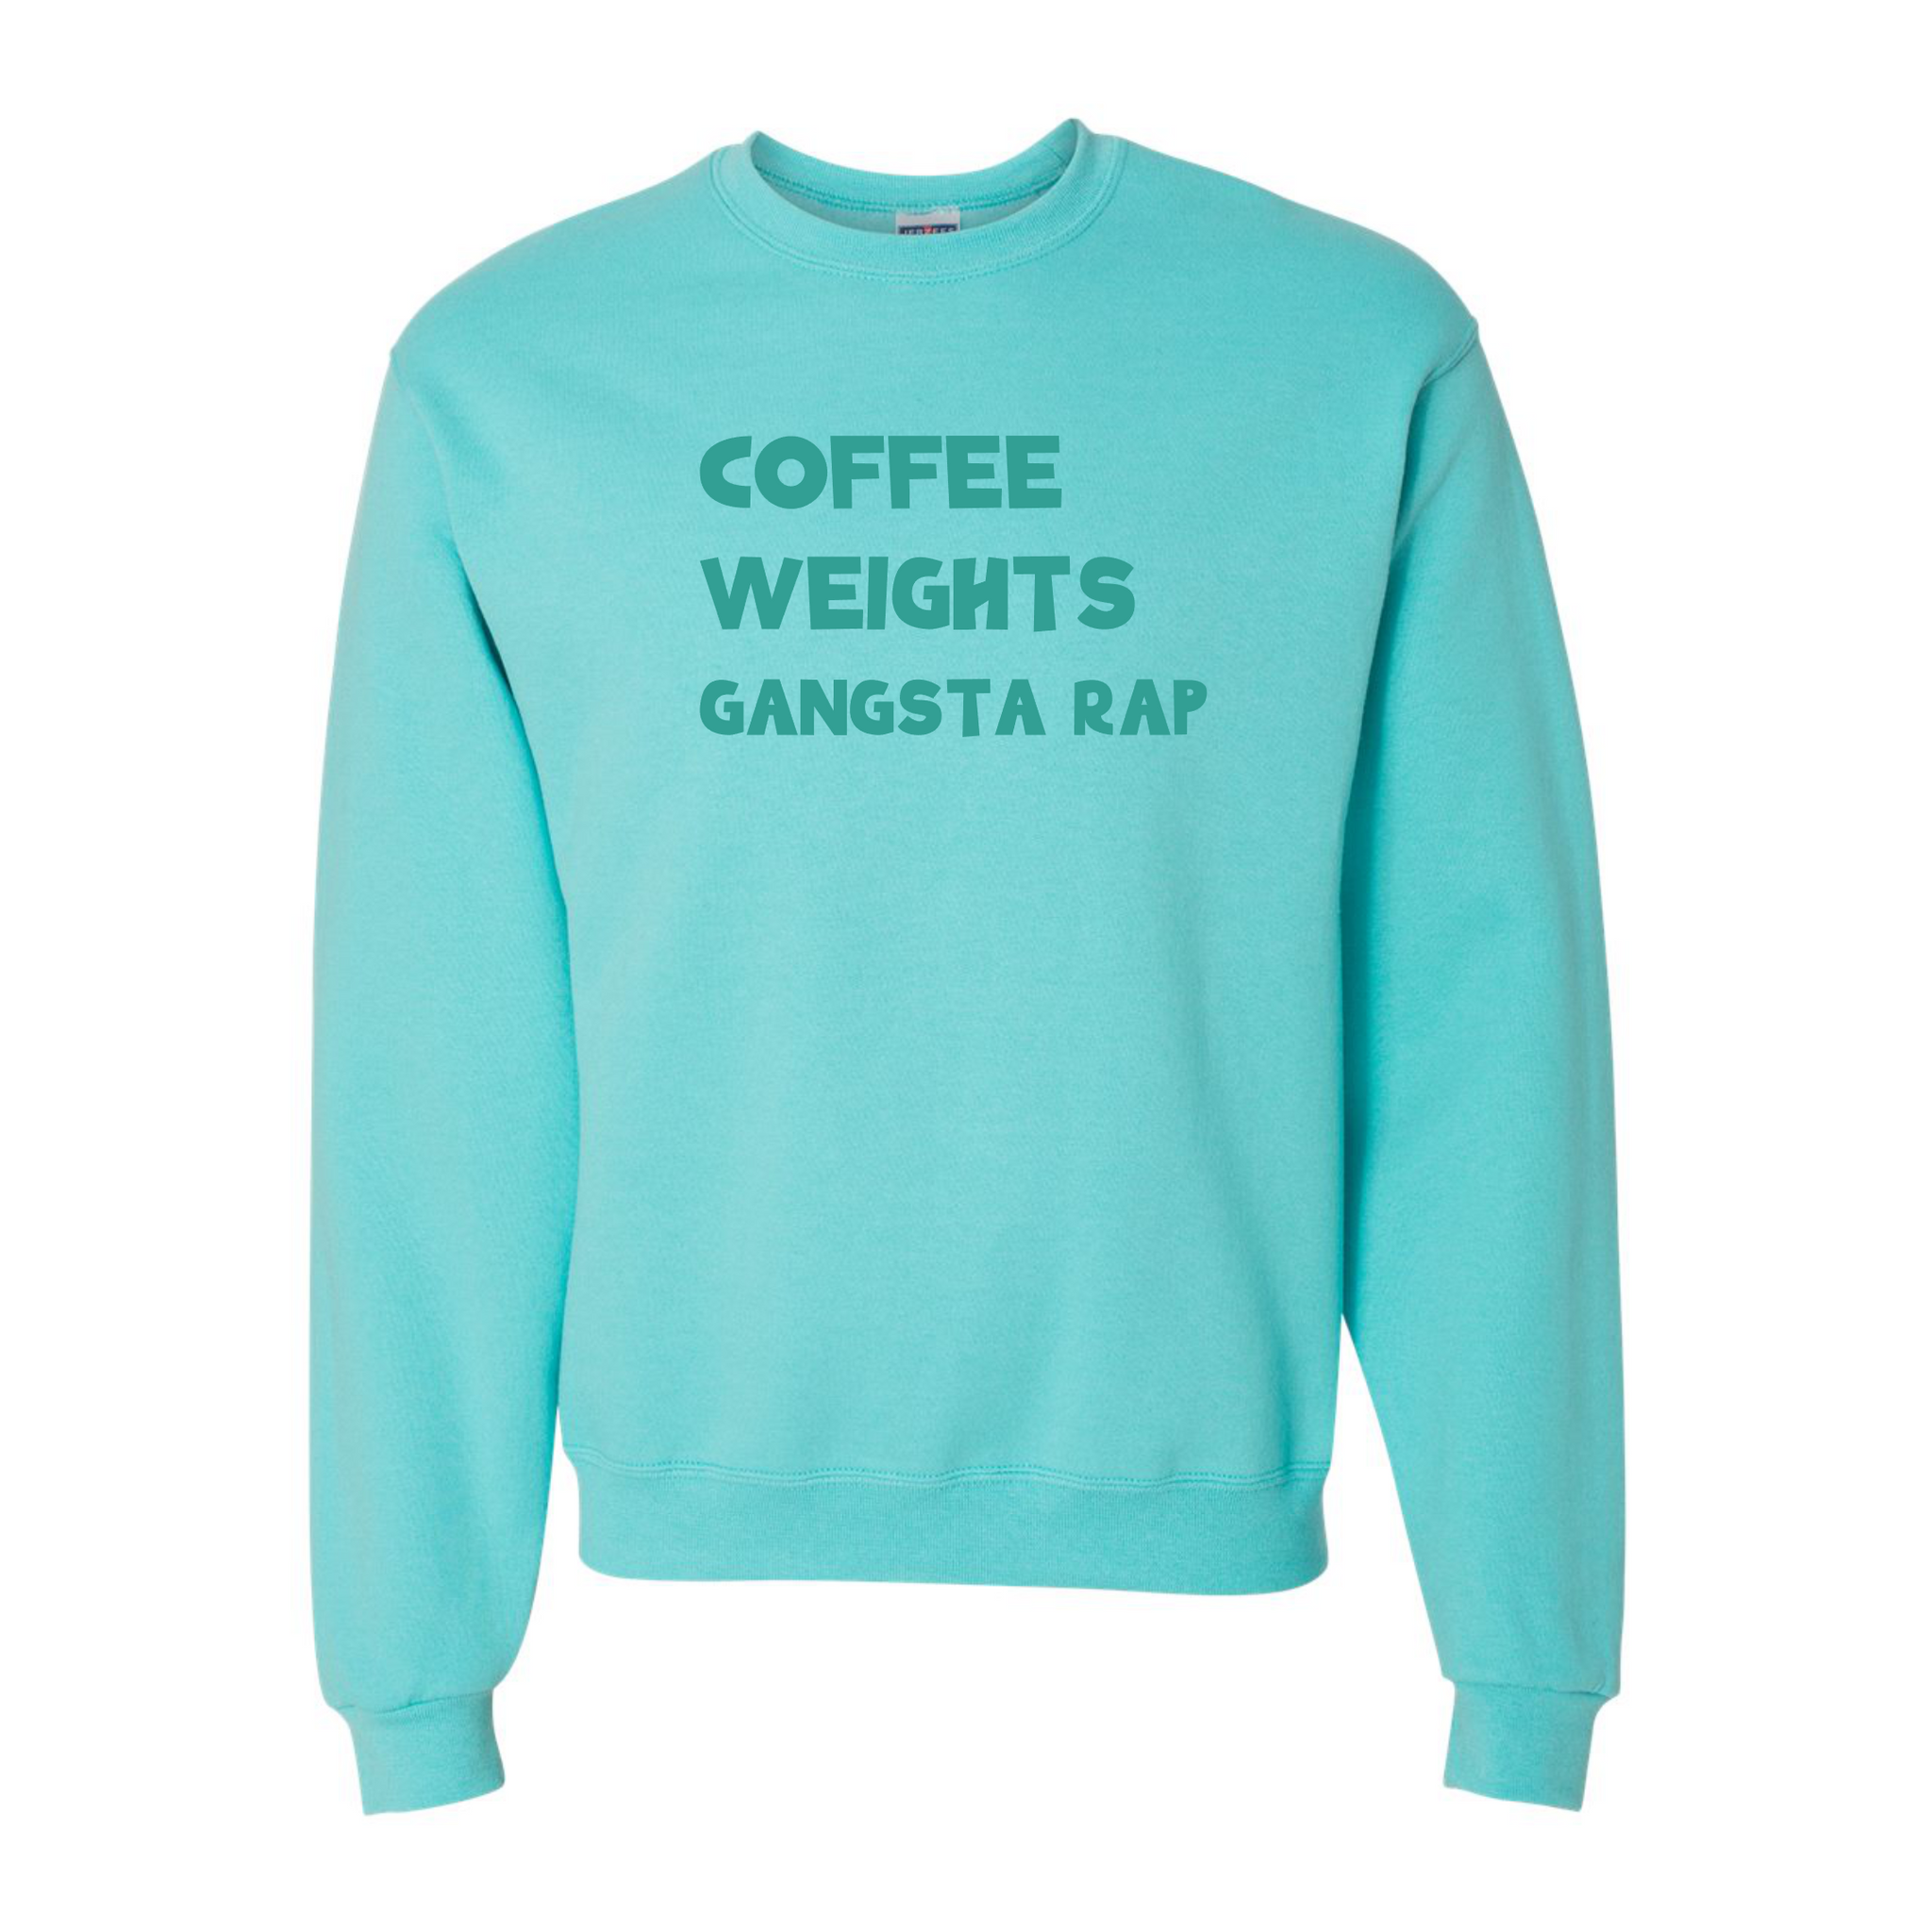 Coffee Weights Gangsta Rap - Turquoise Sweatshirt - Adult & Women's Gym Top - S004